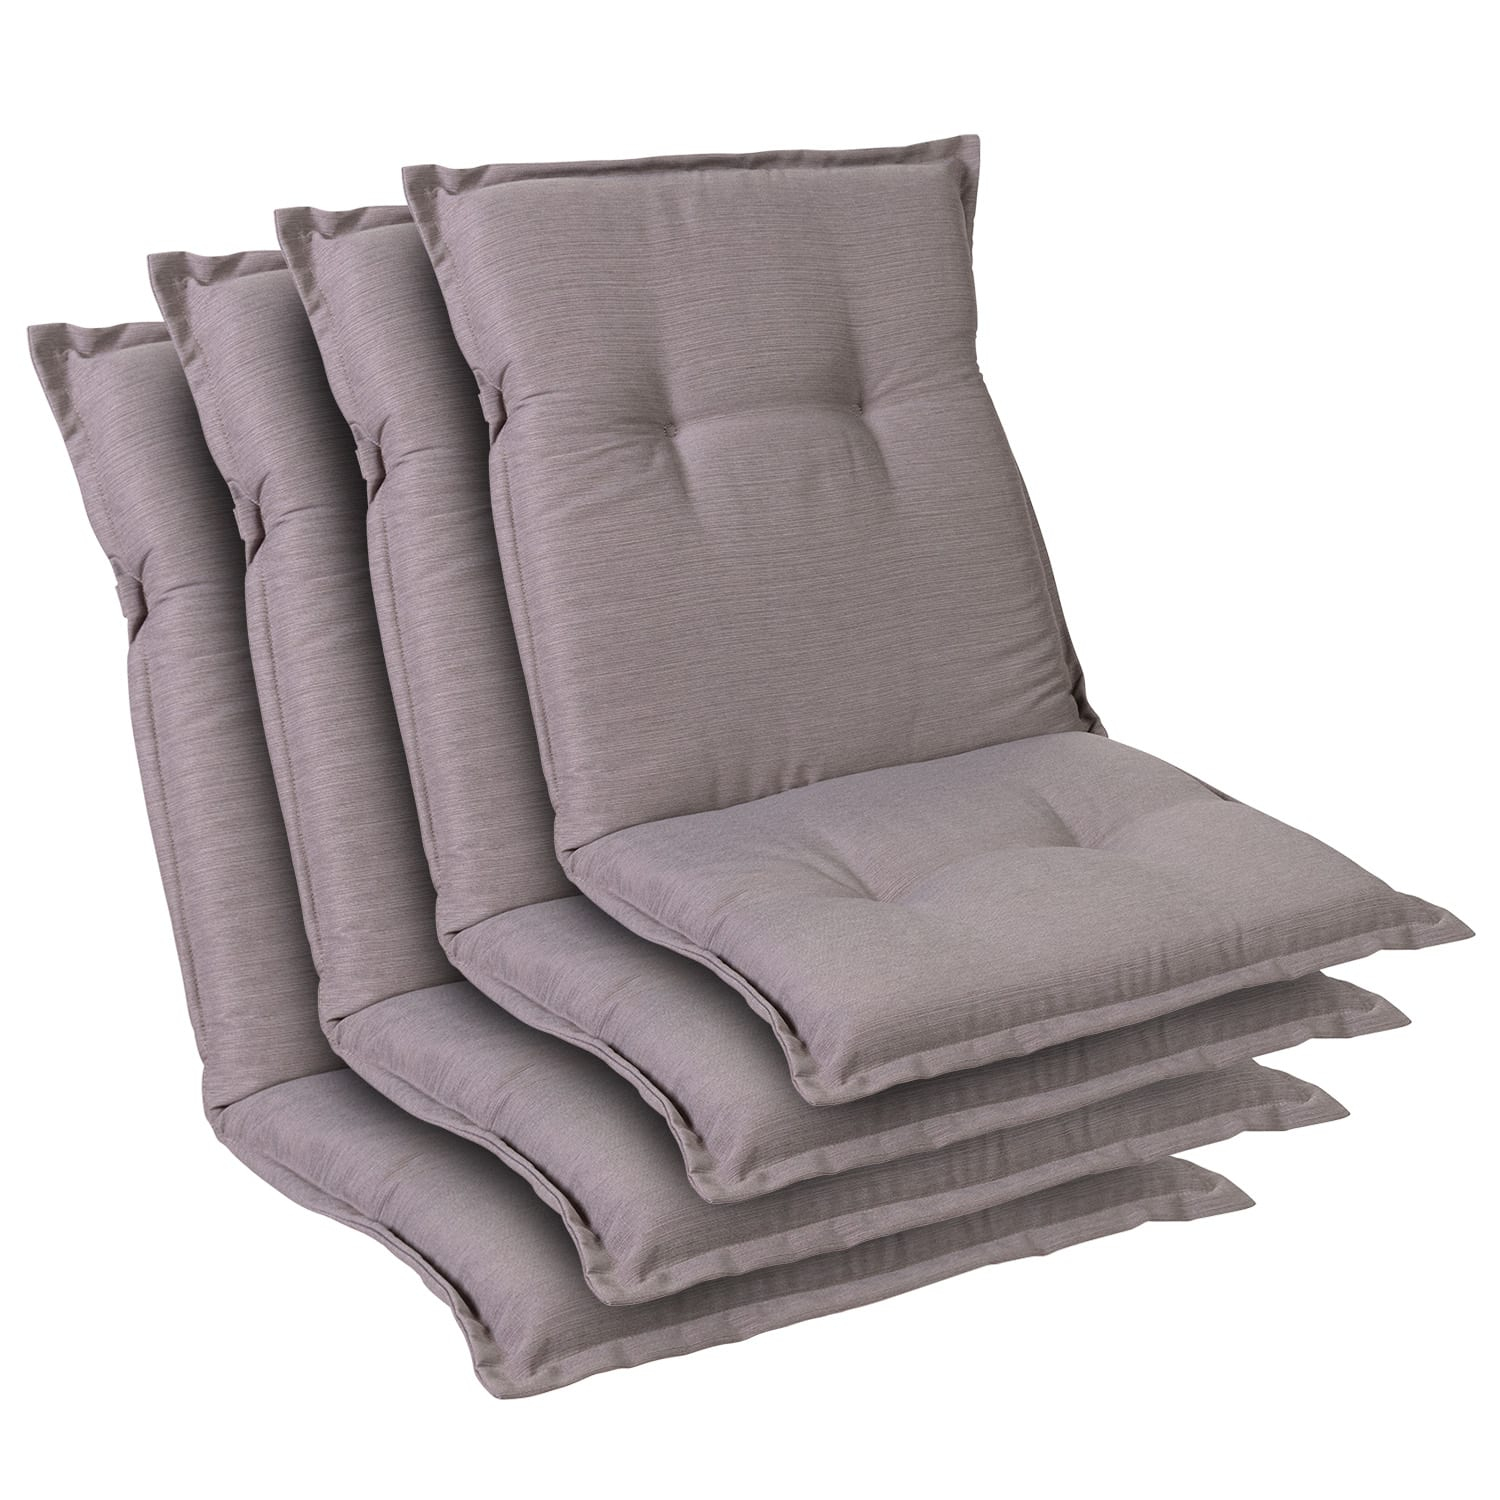 Blumfeldt Prato, upholstered cushion, chair pad, small backrest, garden chair, polyester, 50x100x8cm, 4 x cushion